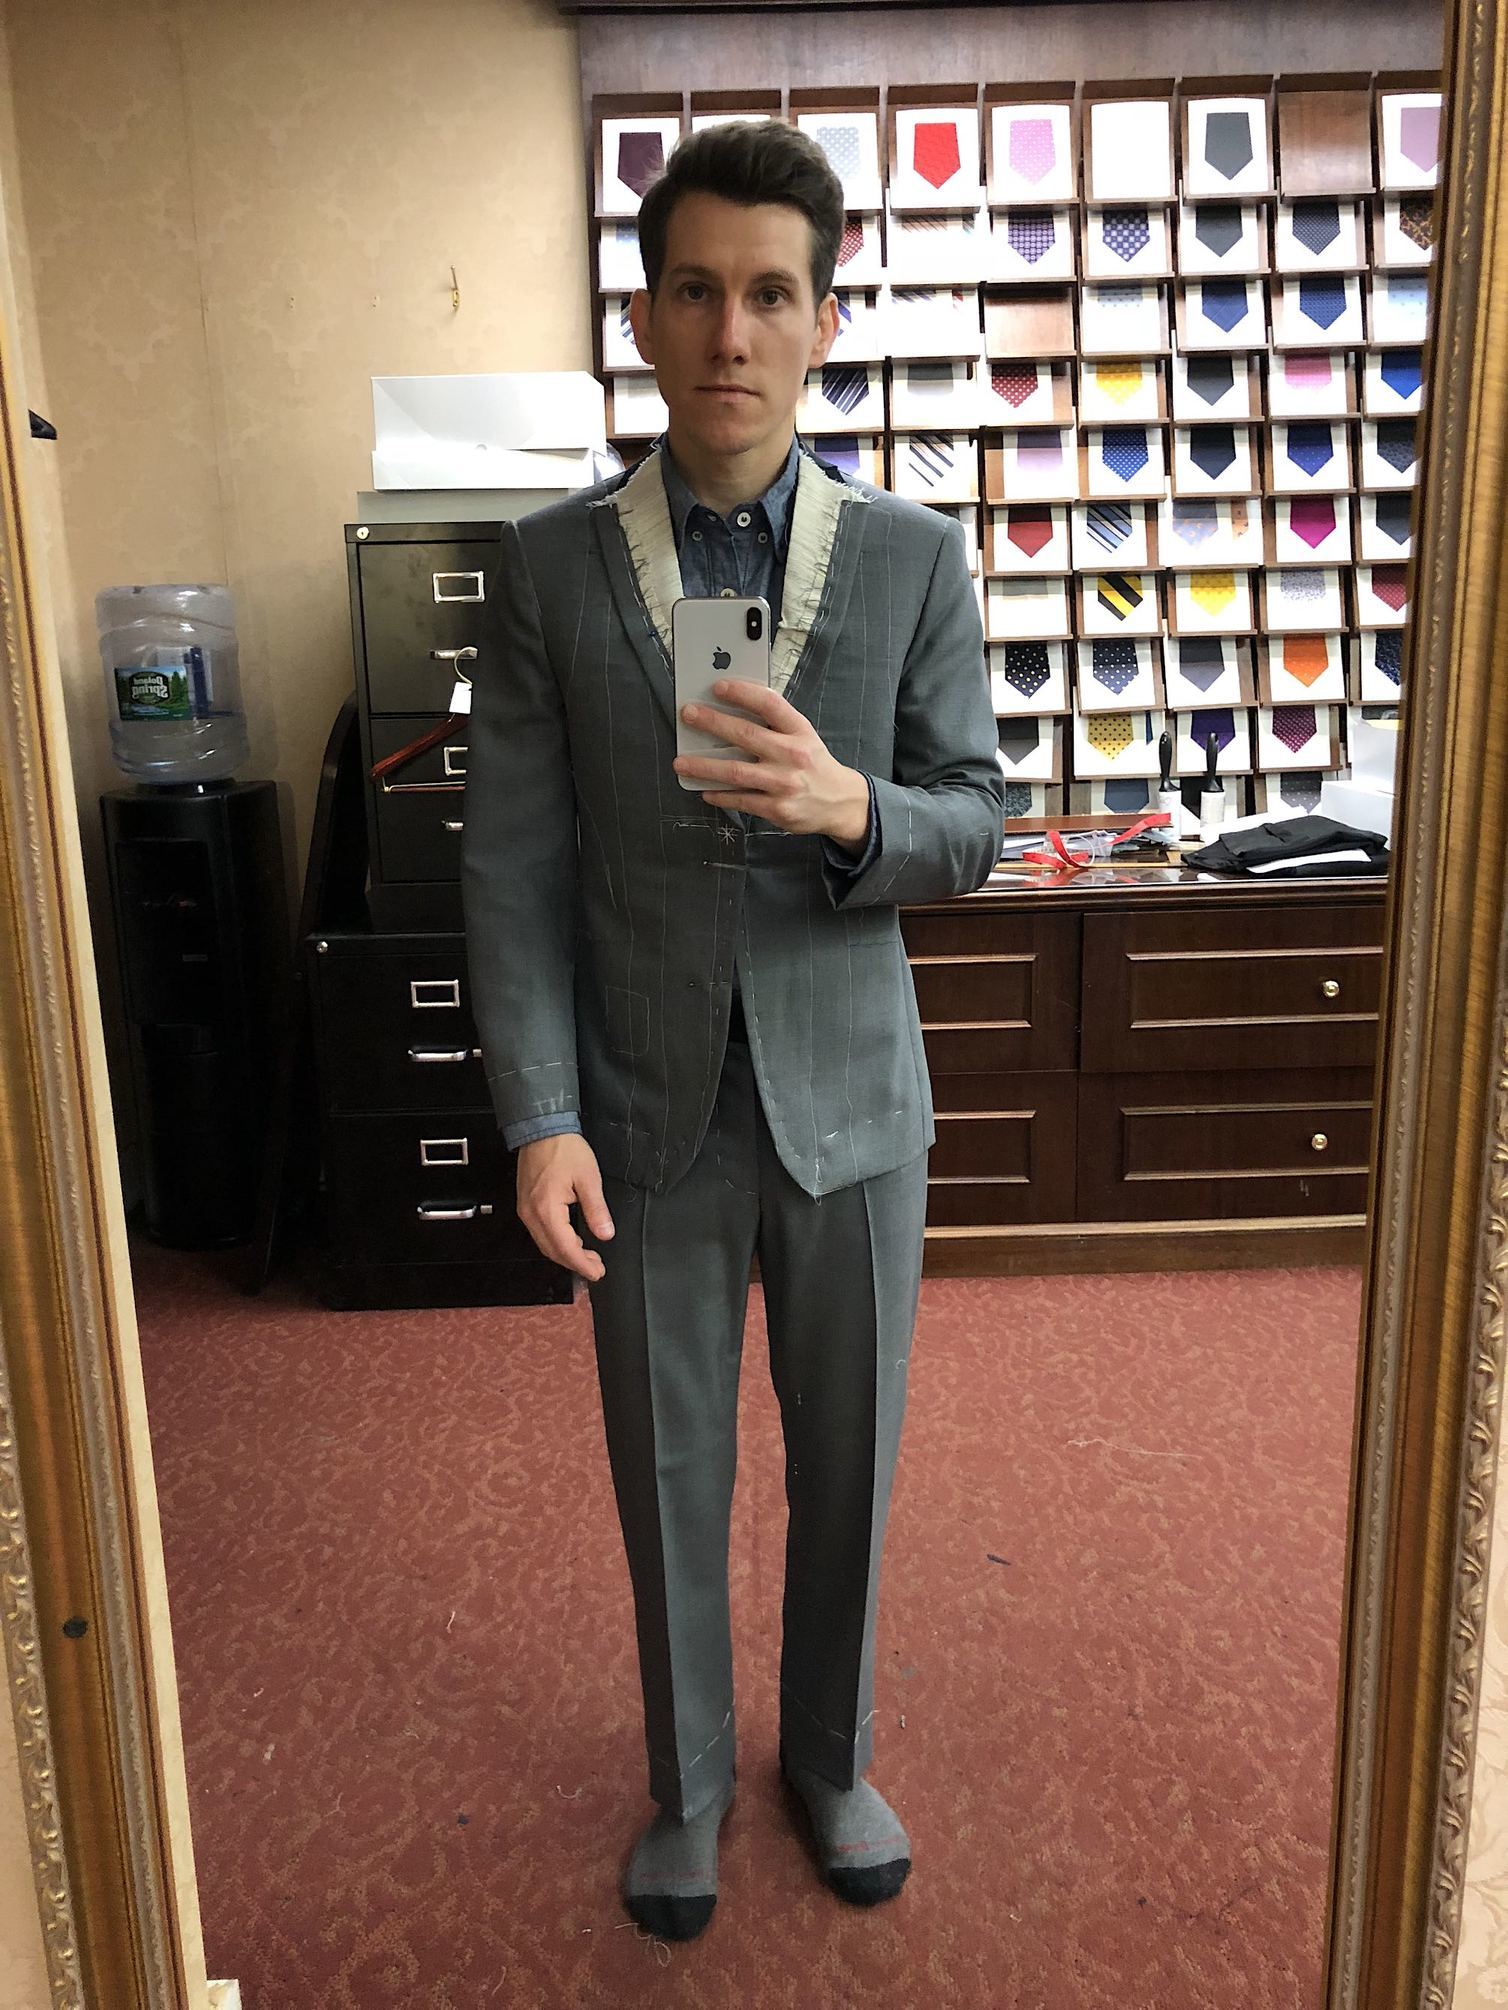 Can short guys (5.6') look good in suits? - Quora